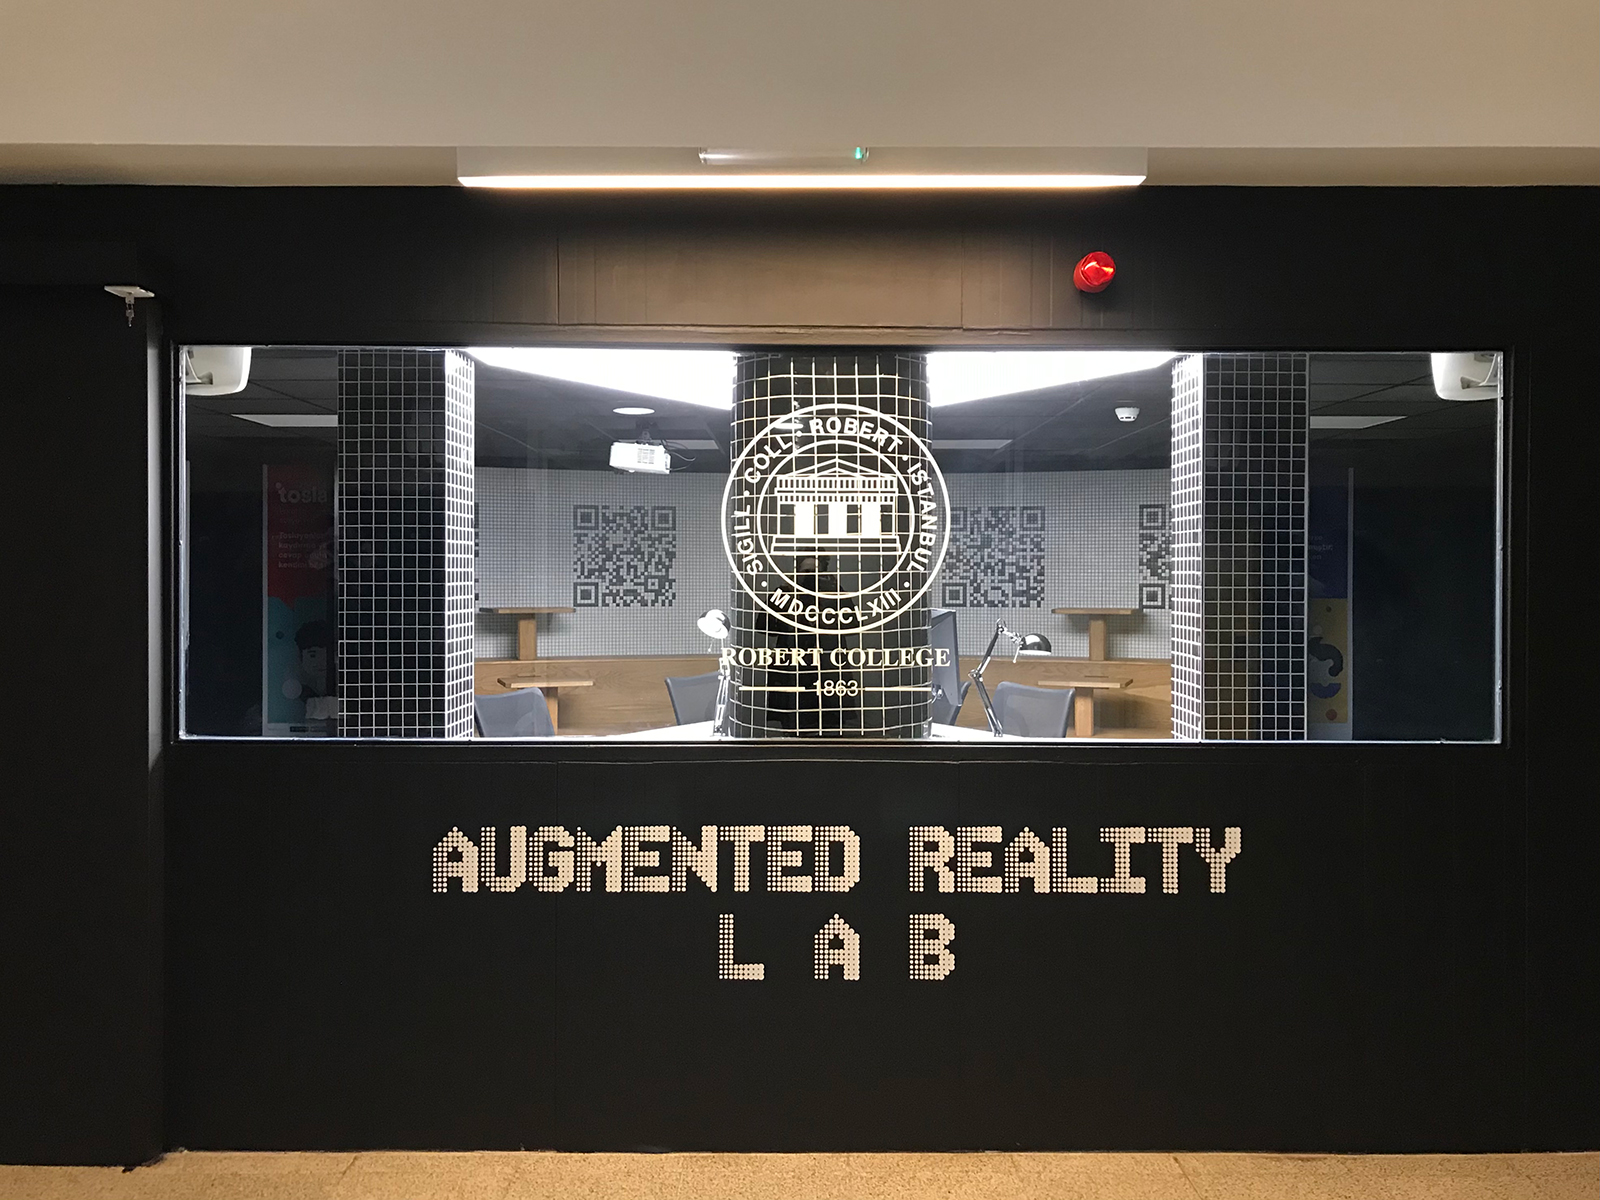 Robert College "Augmented Reality Laboratory" 9